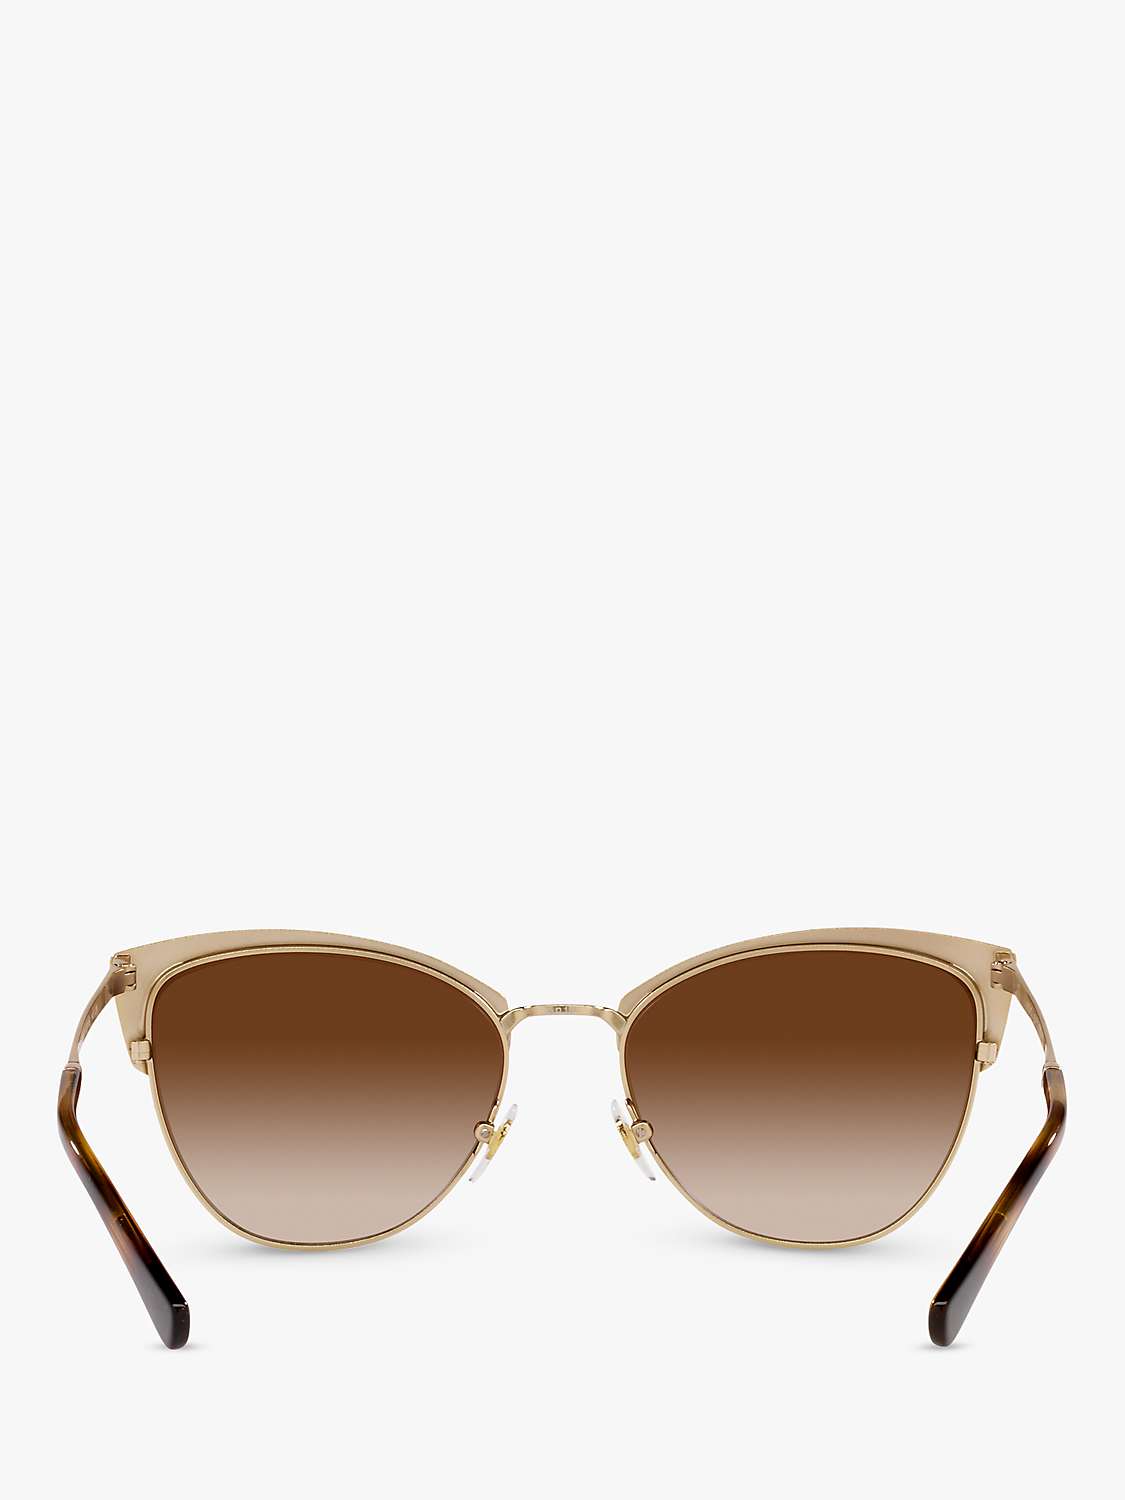 Buy Vogue VO4251S Women's Butterfly Sunglasses, Beige/Brown Gradient Online at johnlewis.com